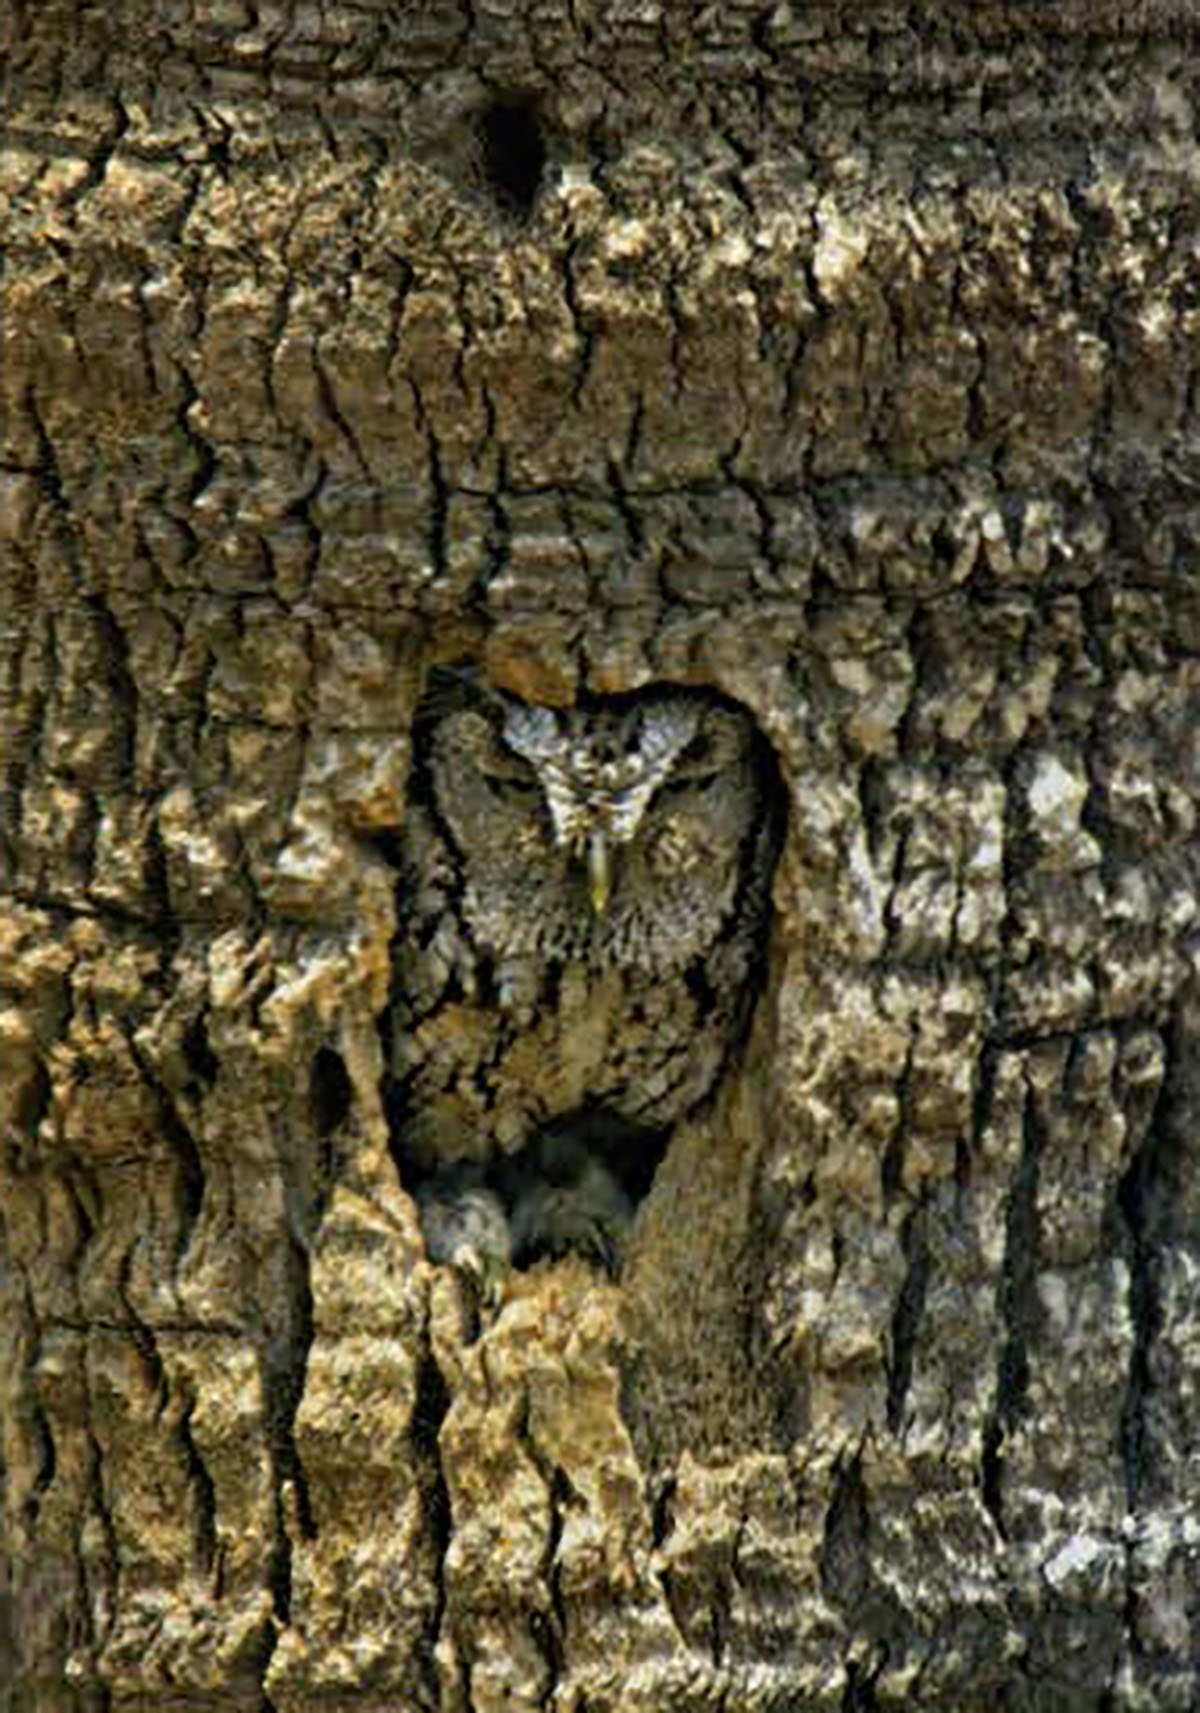 Photo of an owl inside the hole of a tree